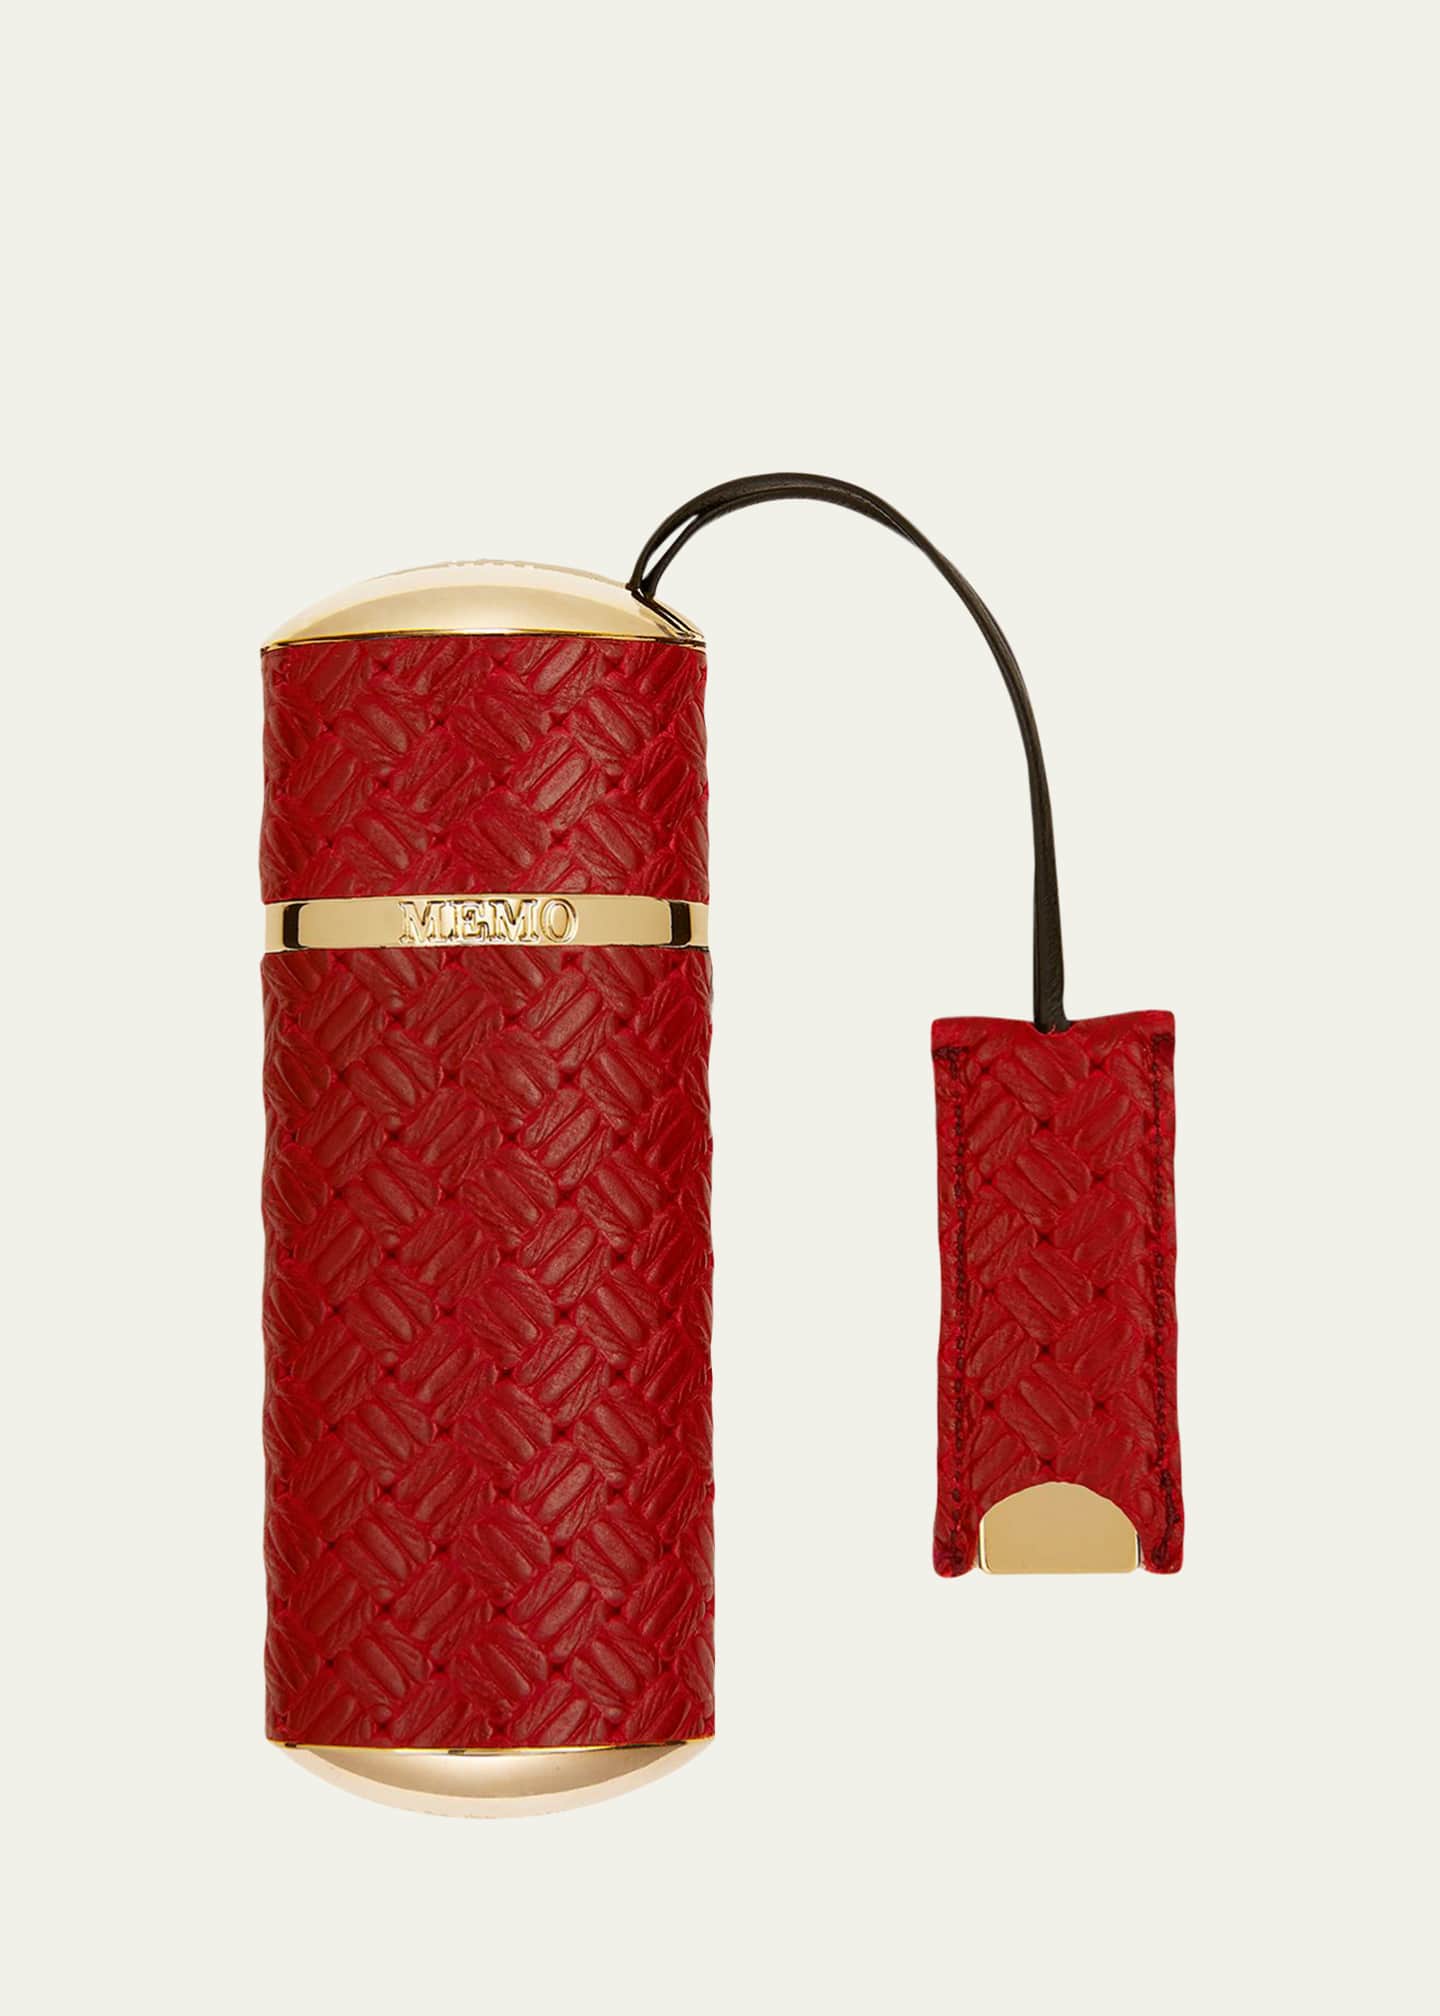 Memo Paris Red Knitted Refillable Travel Spray - Bergdorf Goodman